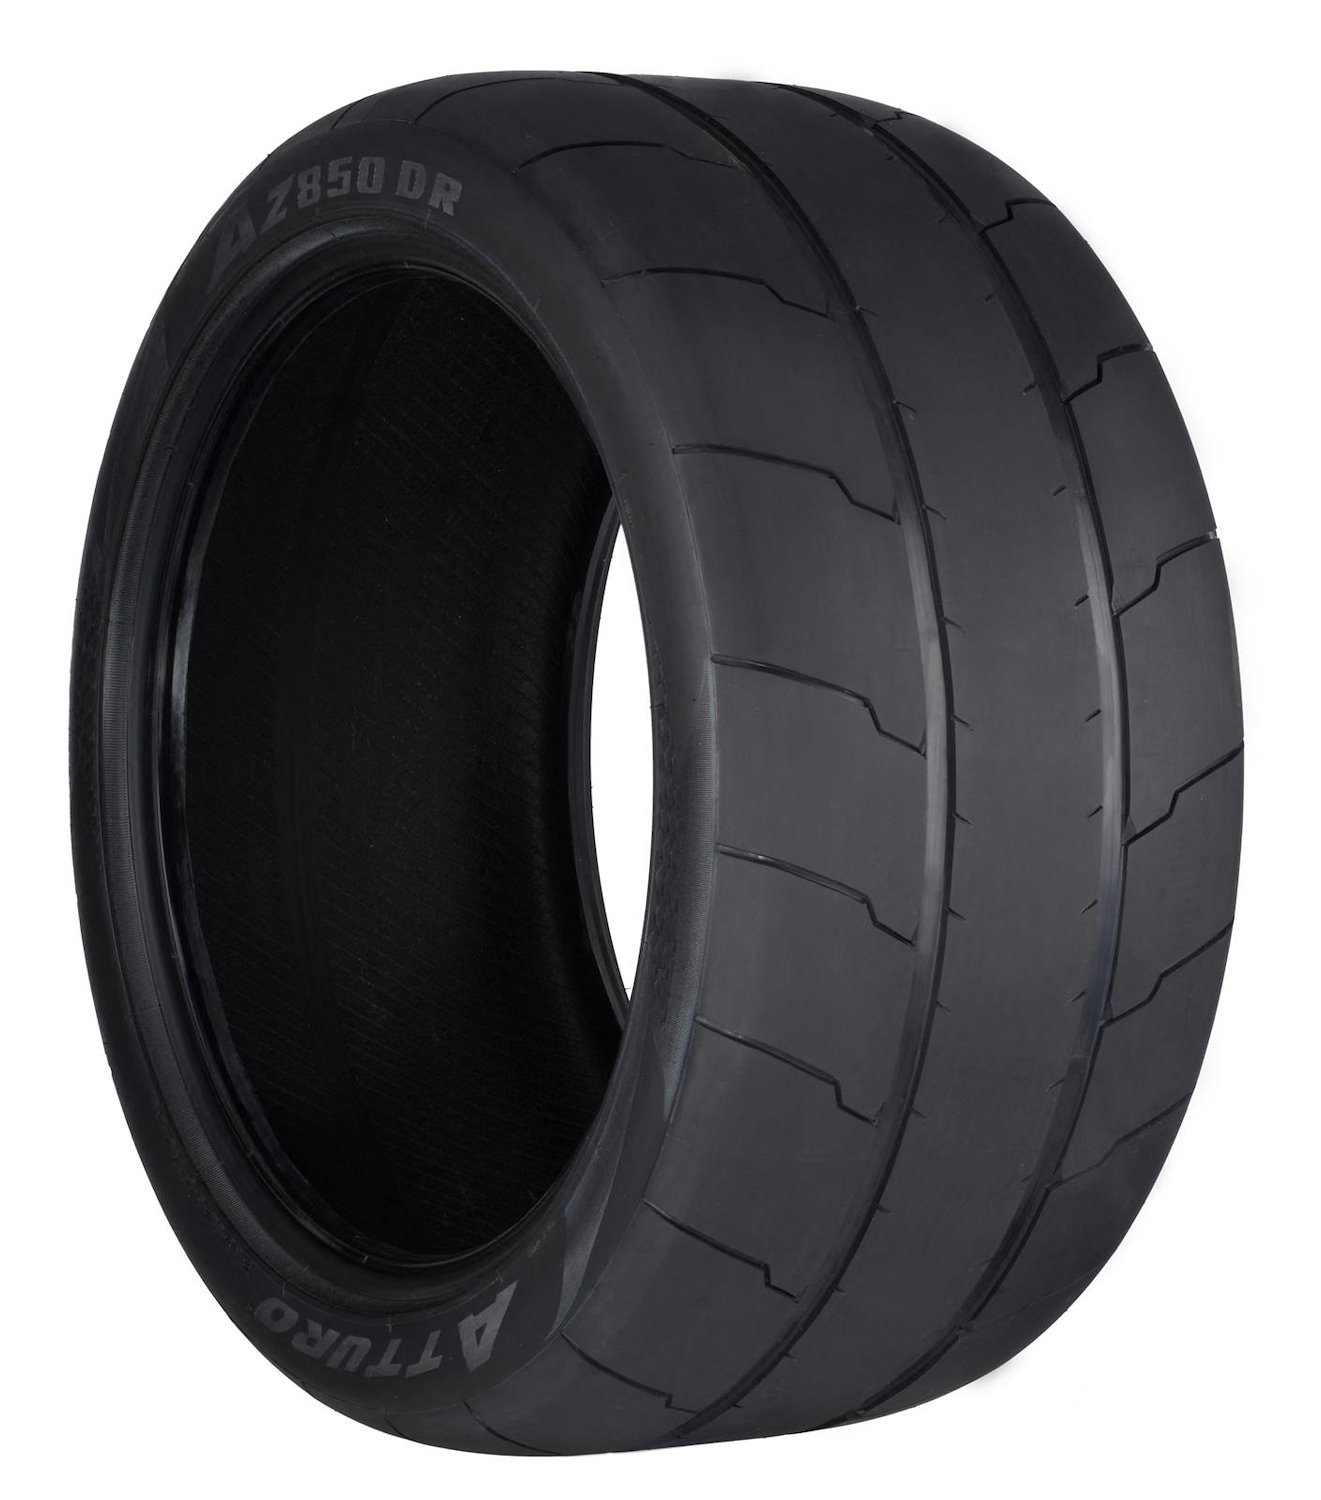 AZ 850 DR Drag Radial Tire, 285/35R19